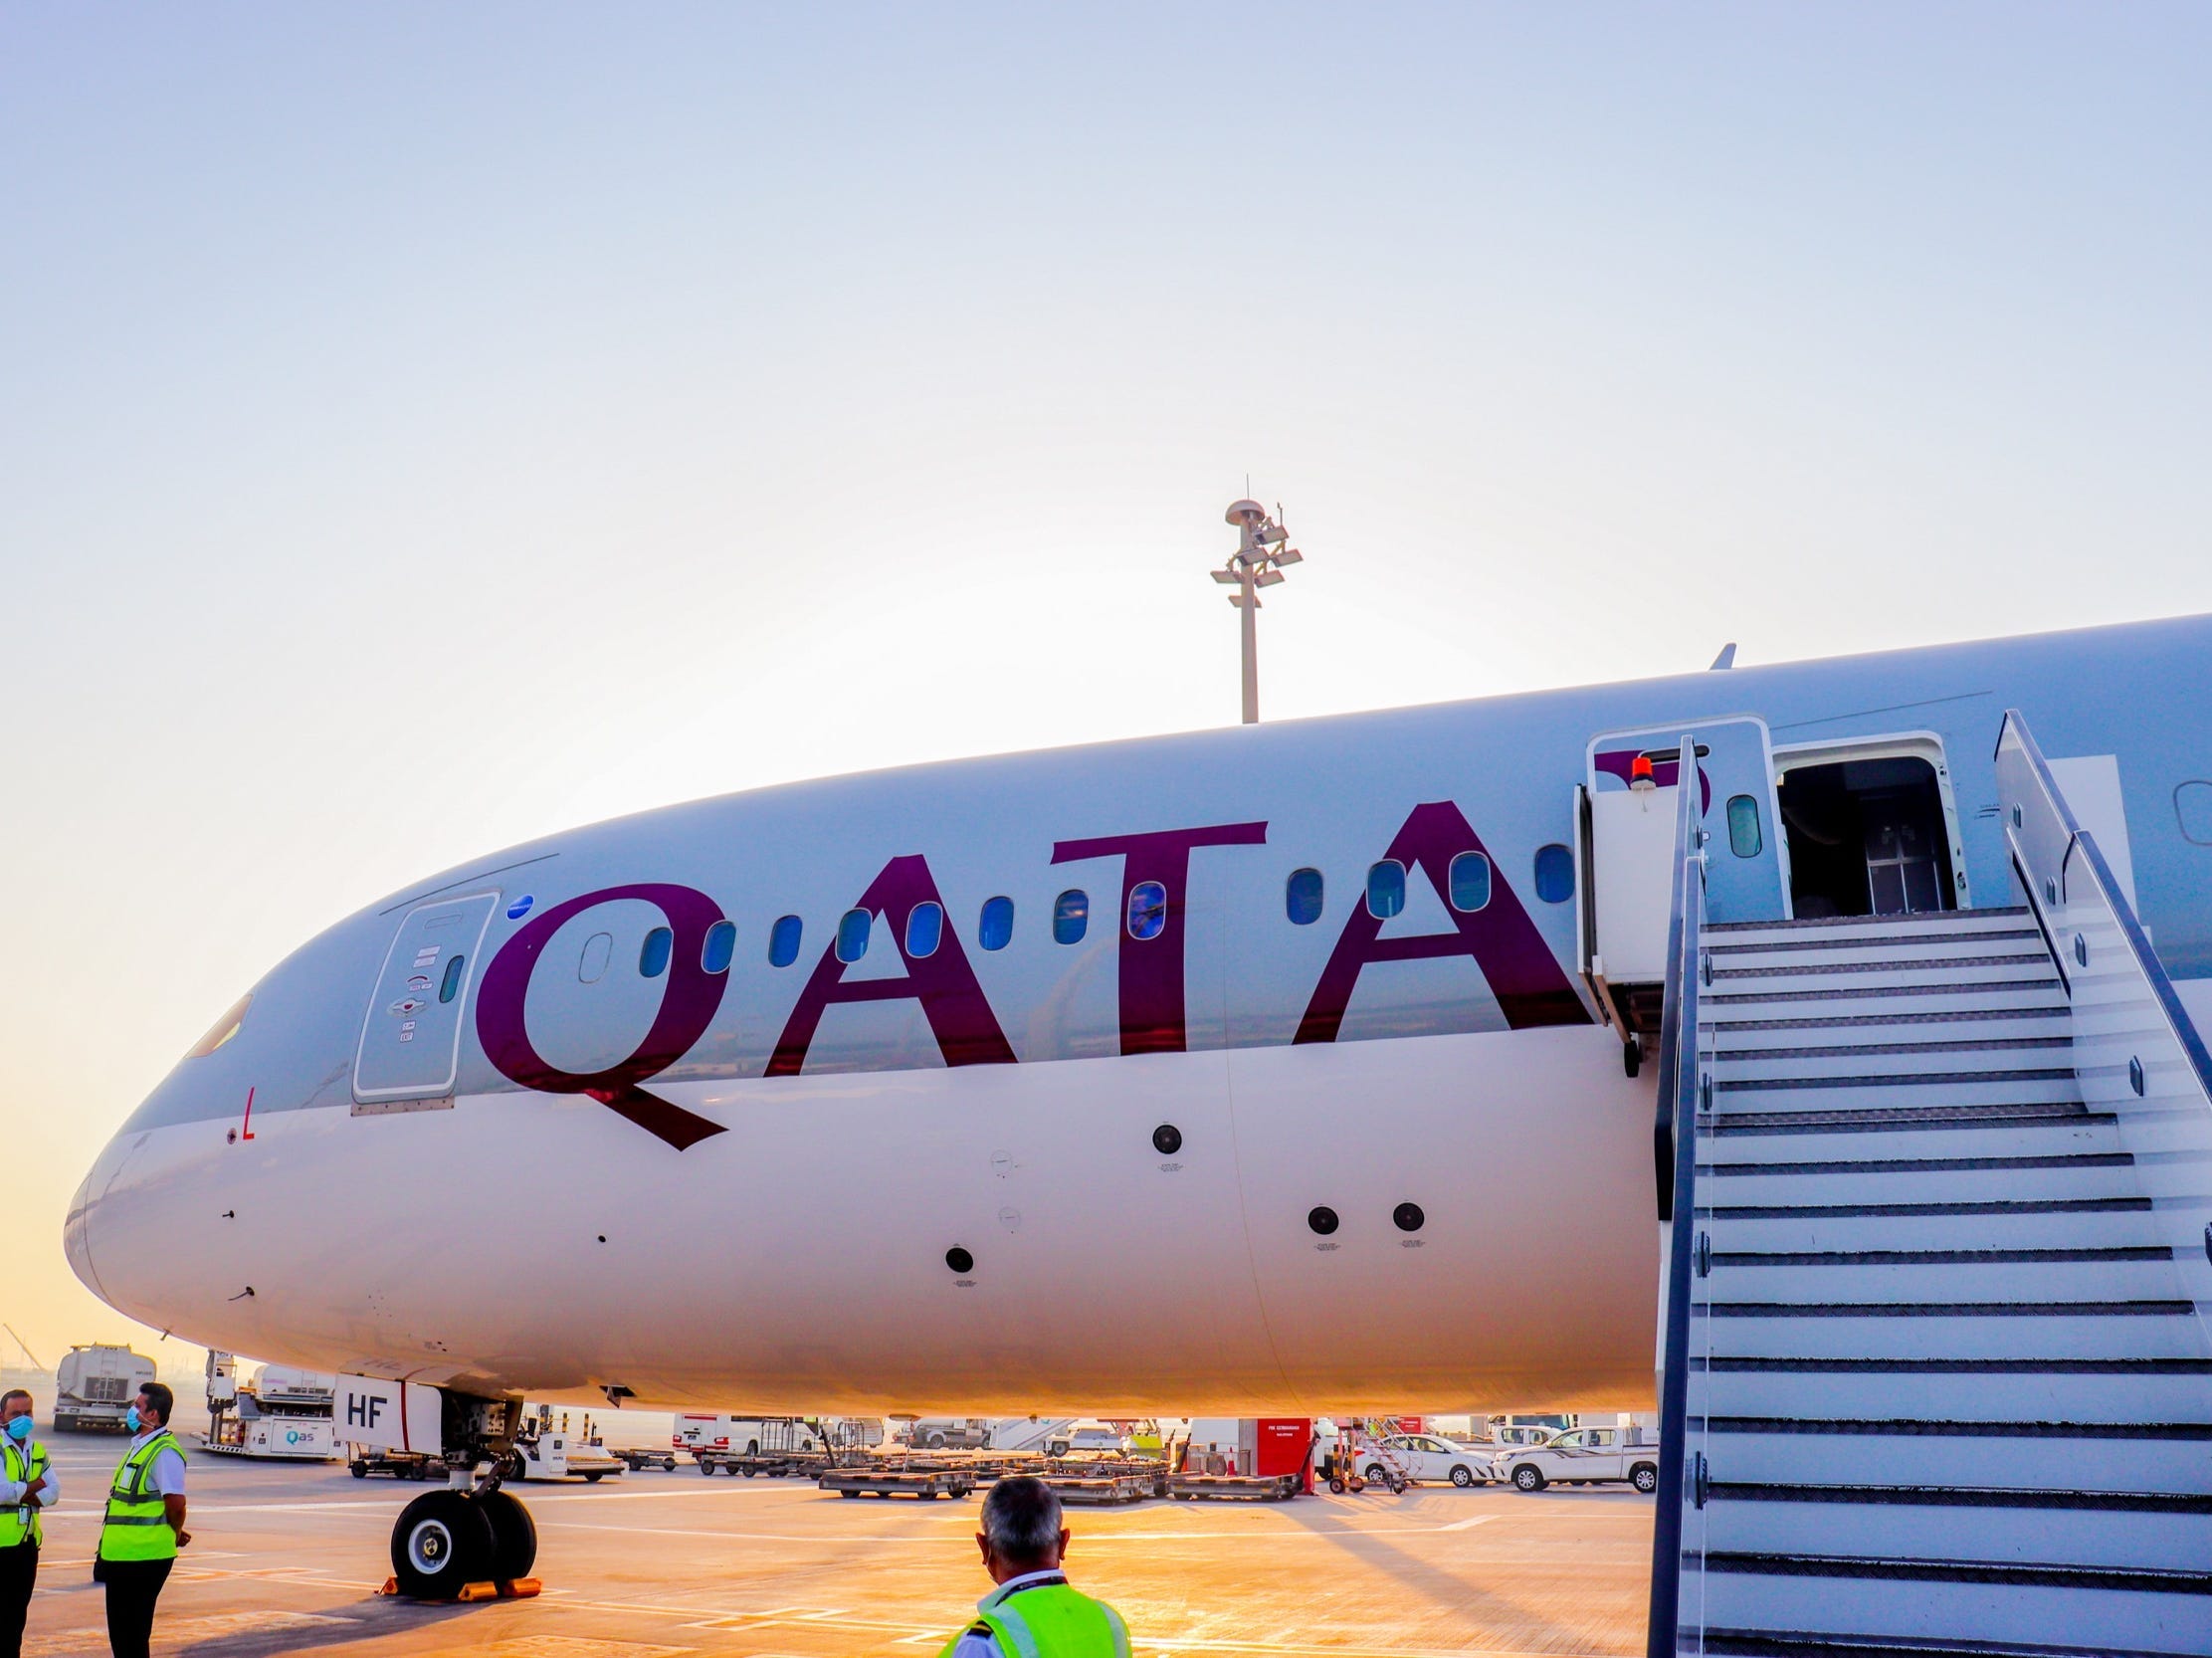 Flying Qatar Airways during the pandemic — Qatar Airways Flight 2021